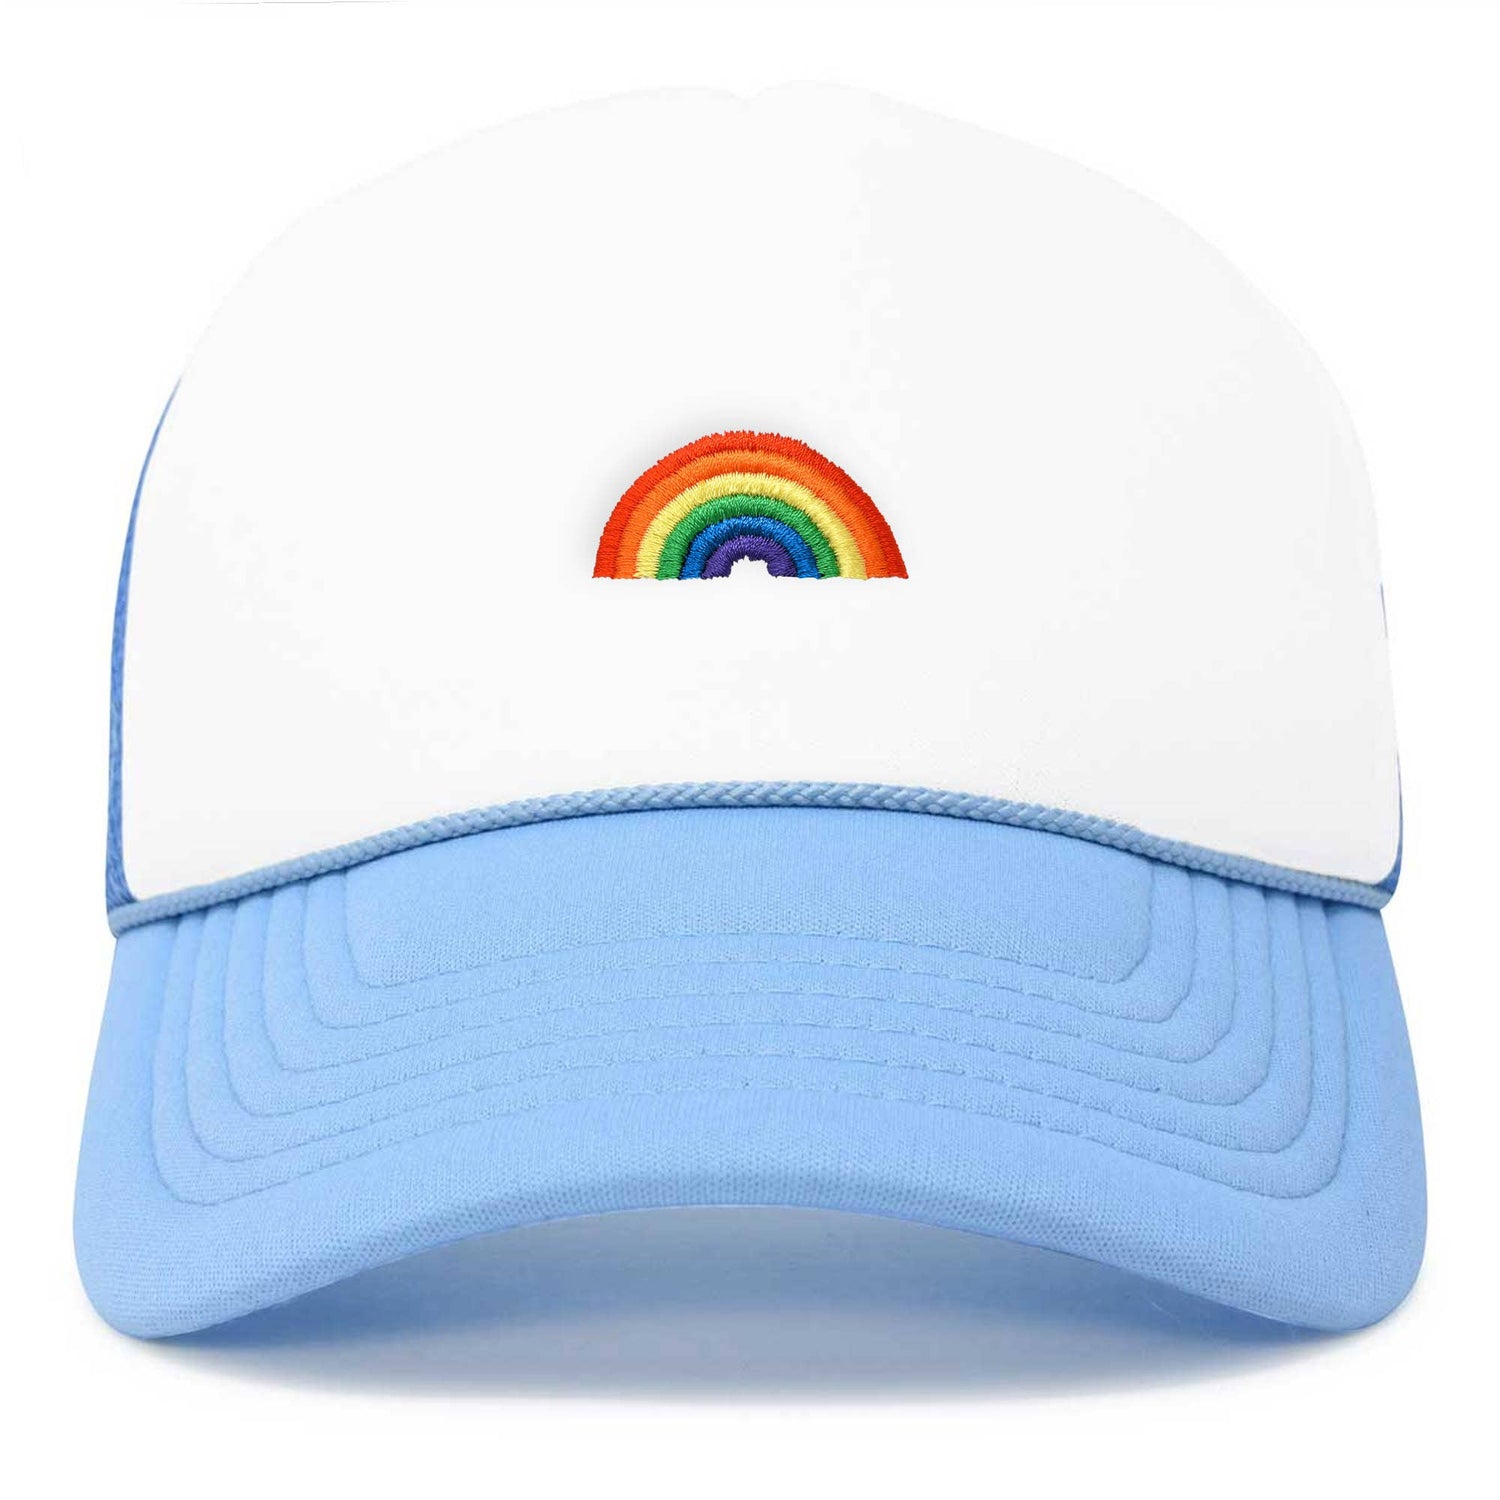 Rainbow Trucker Hat - Light Blue and White